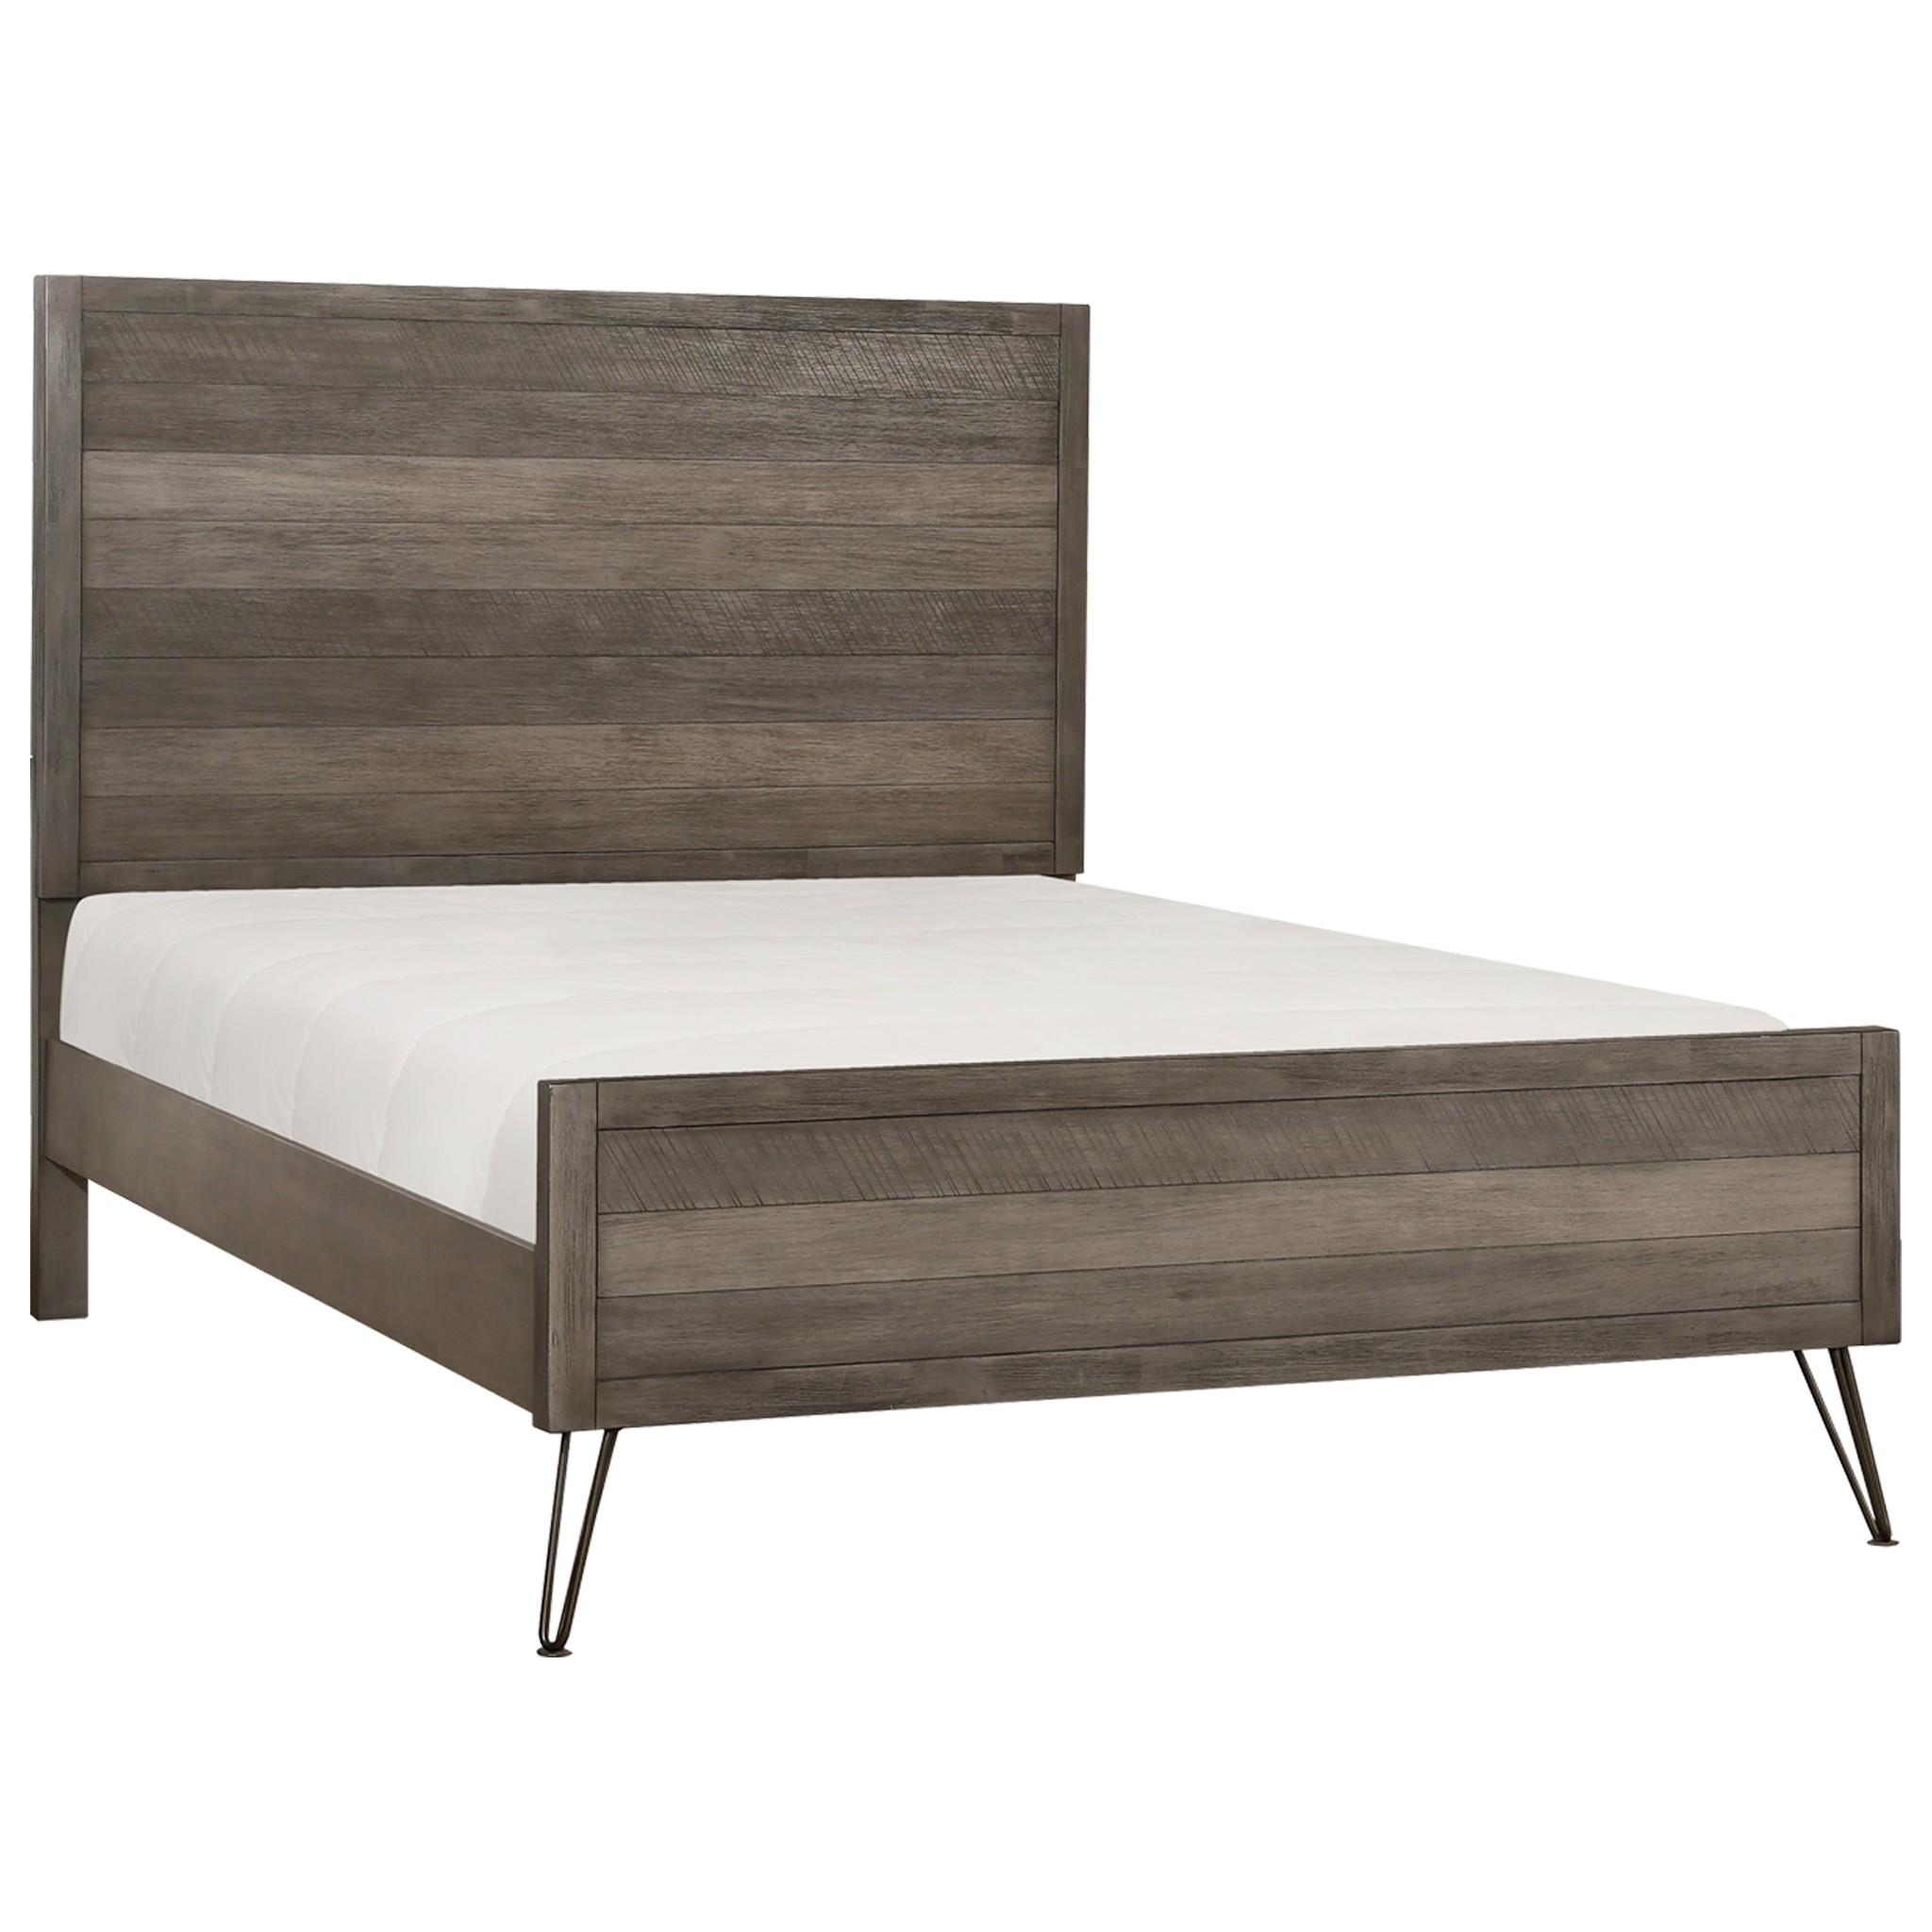 

    
Contemporary 3-Tone Gray Wood Queen Bedroom Set 5pcs Homelegance 1604-1* Urbanite
